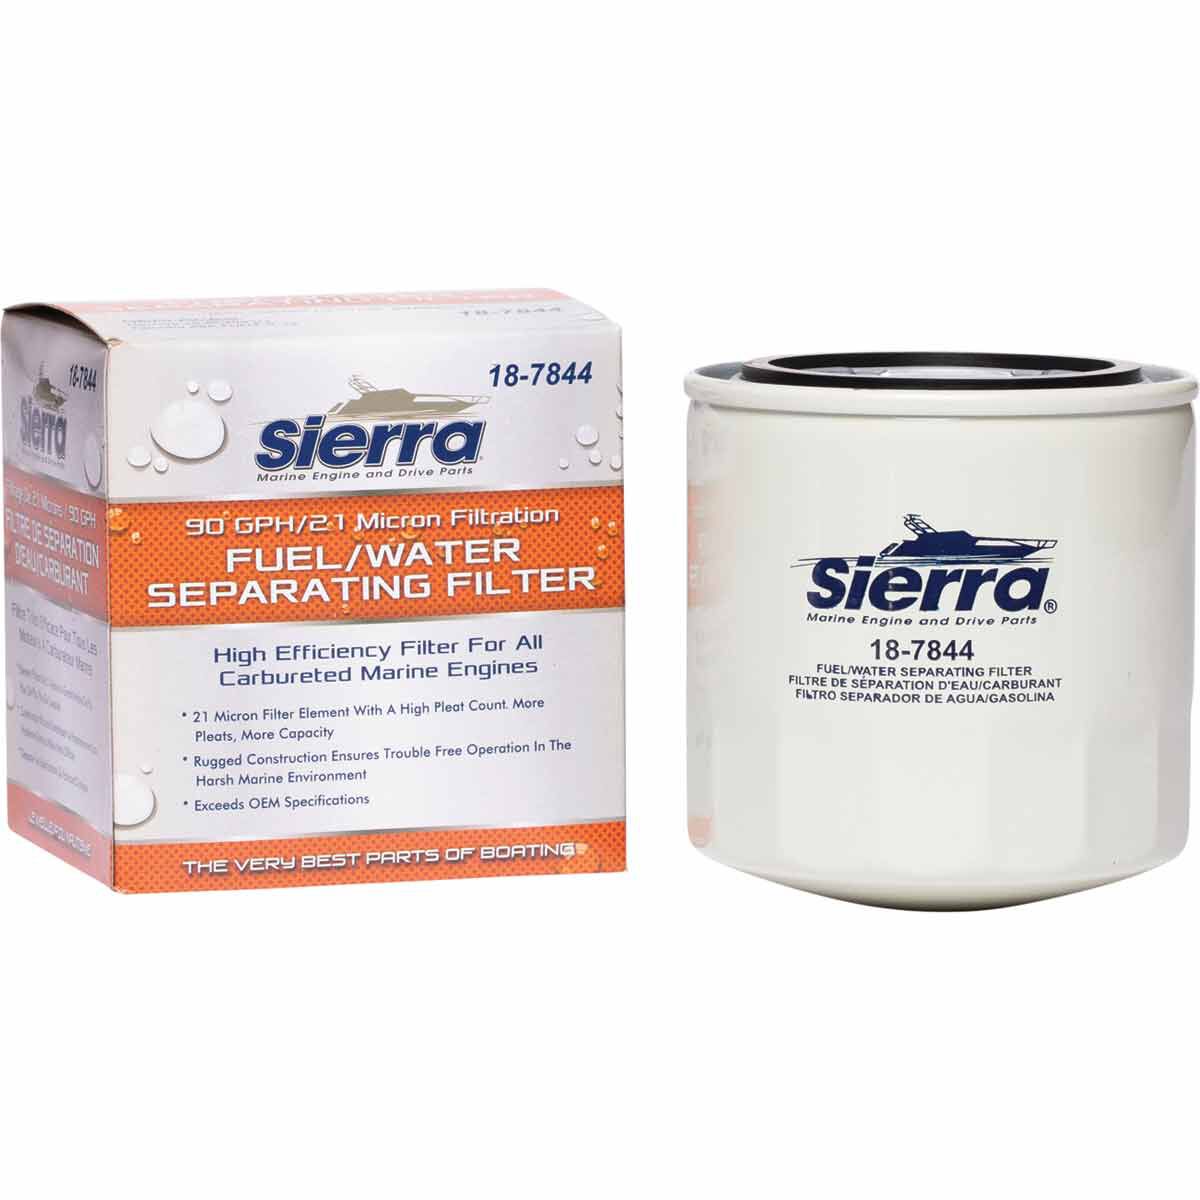 Sierra 21 Micron Fuel/Water Separating Filter - S-18-7844